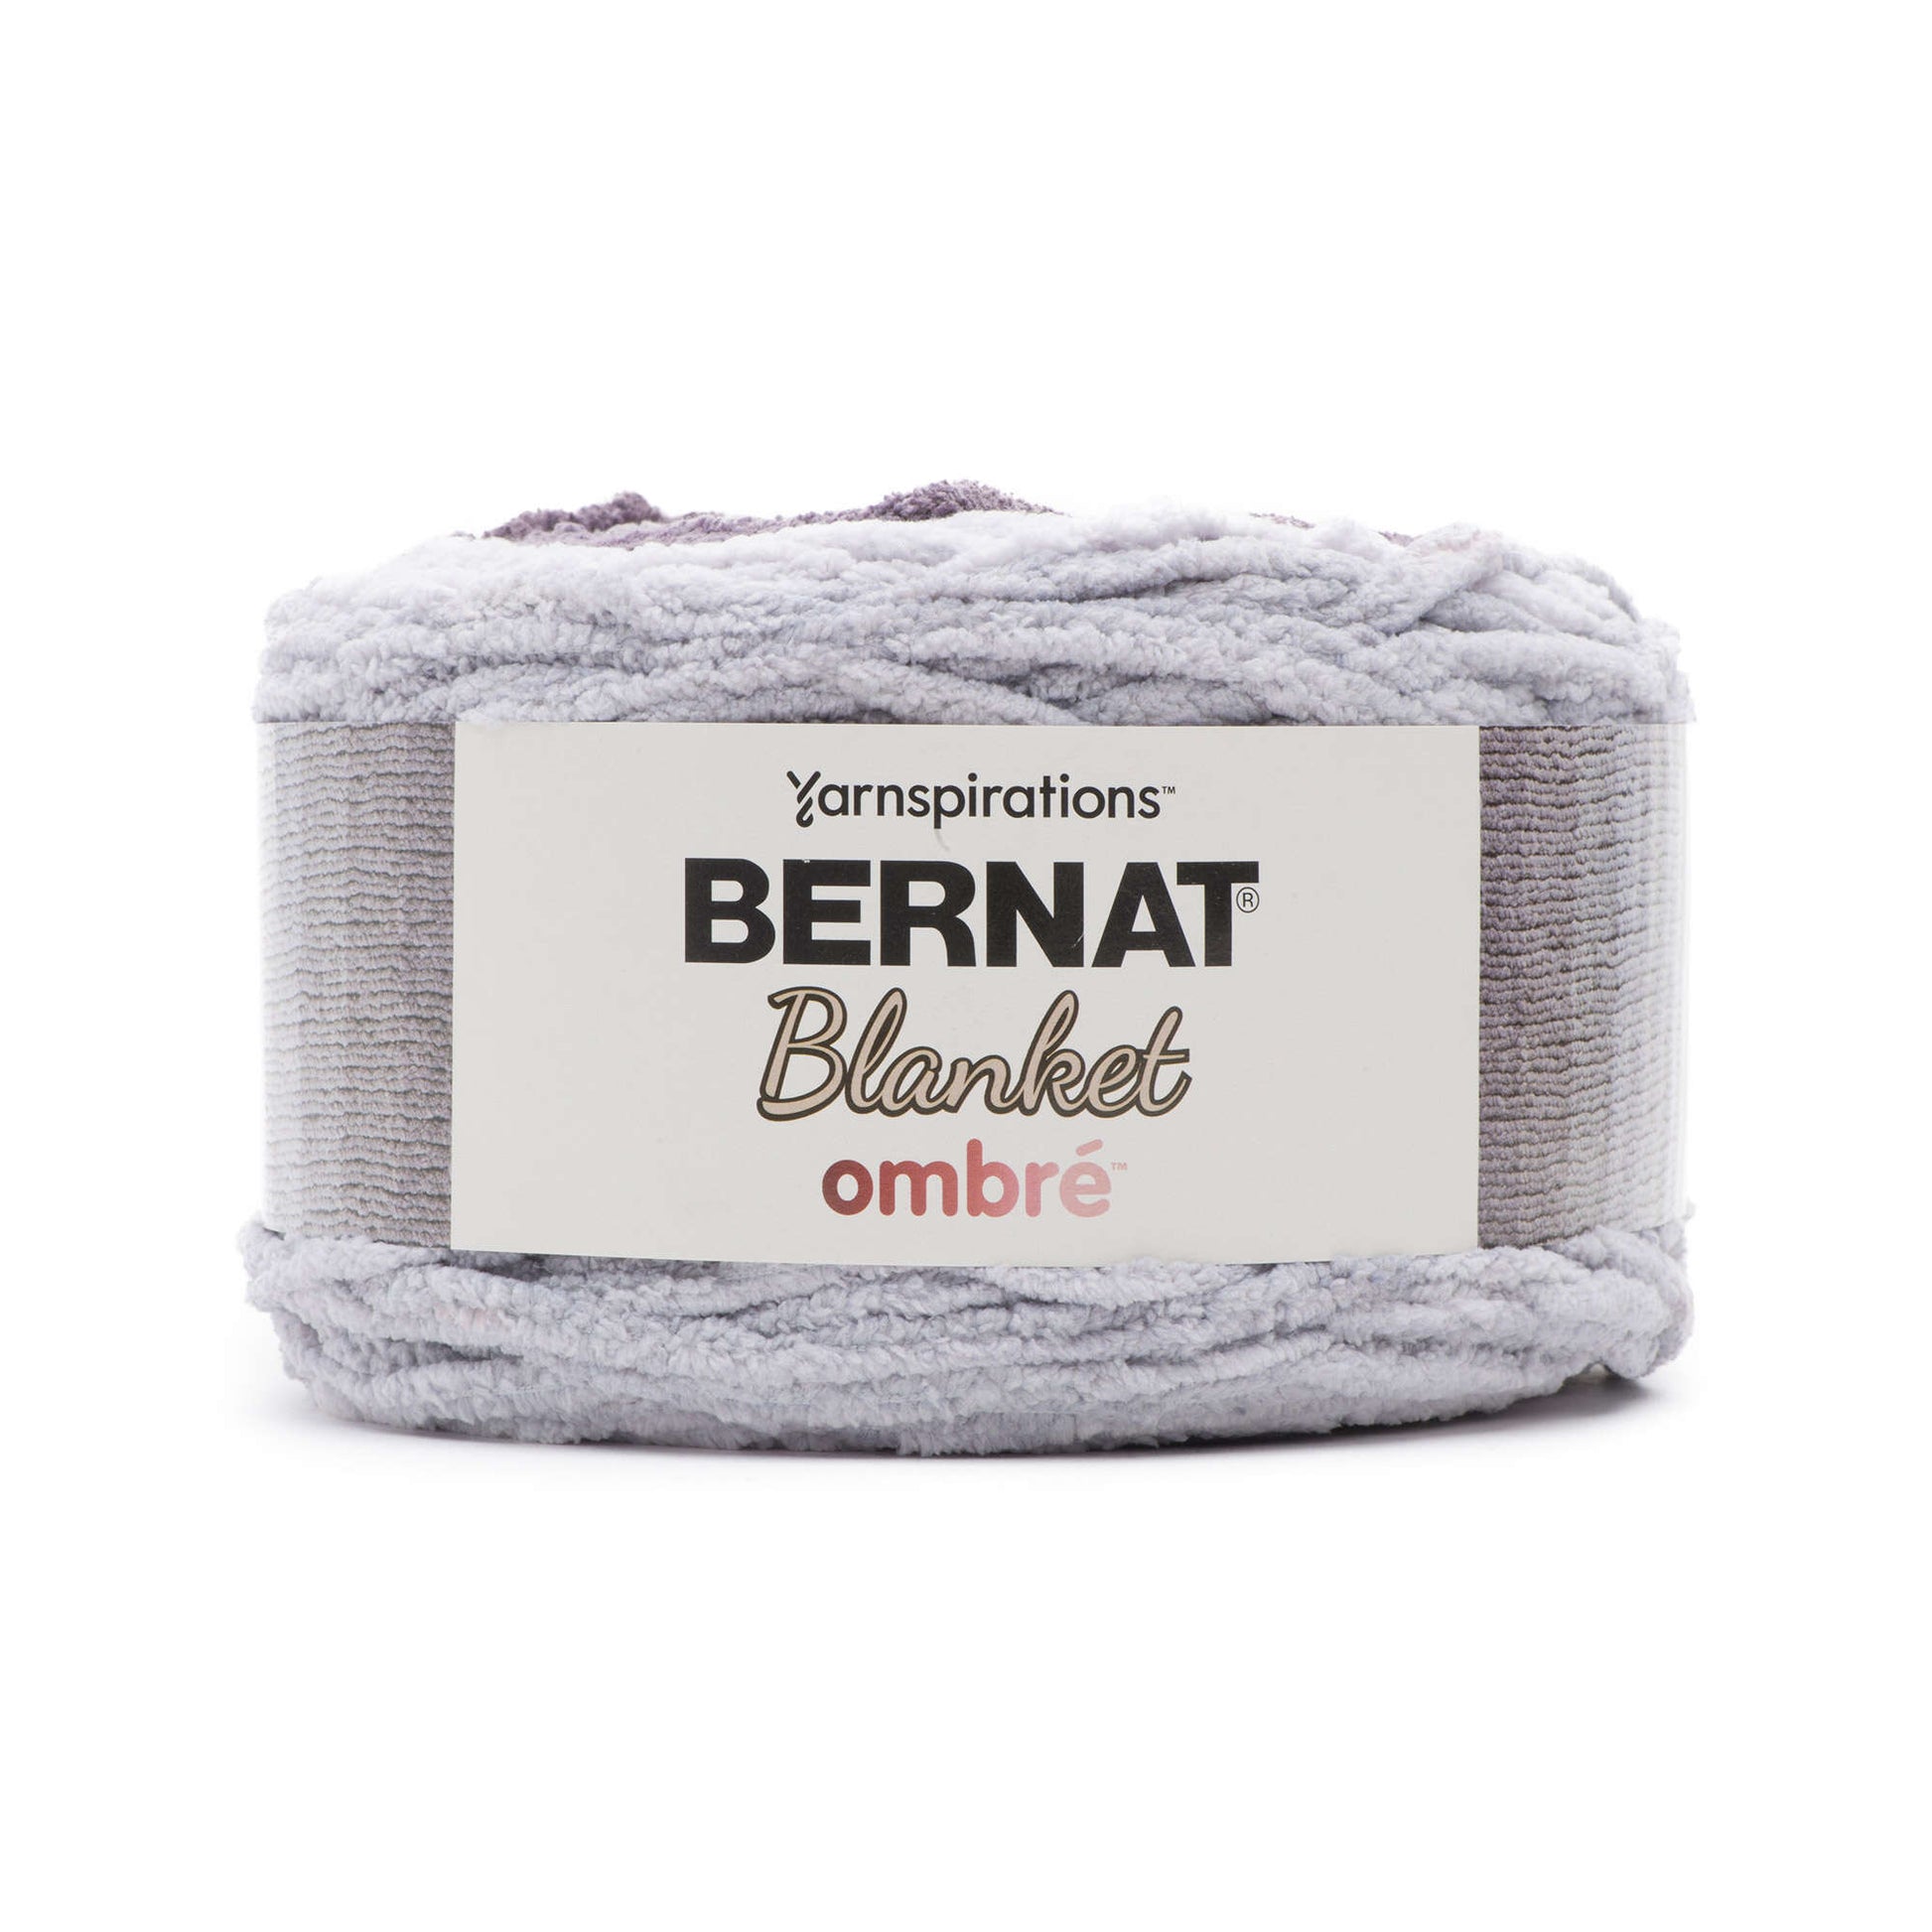 Bernat Blanket Ombres Yarn (300g/10.5oz)